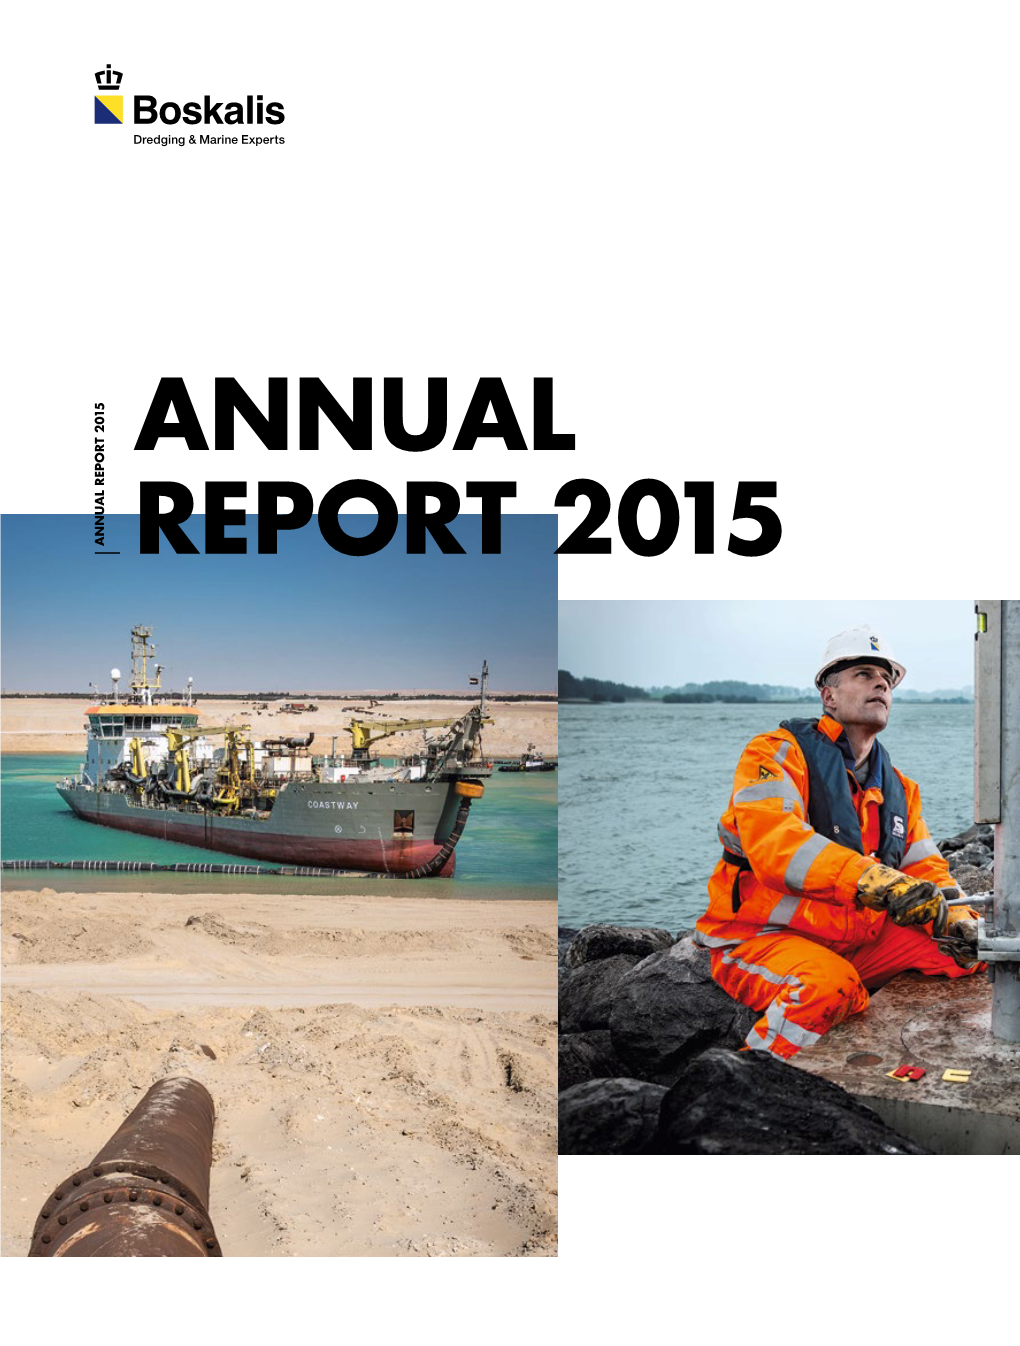 Annual Report 2015 — Boskalis